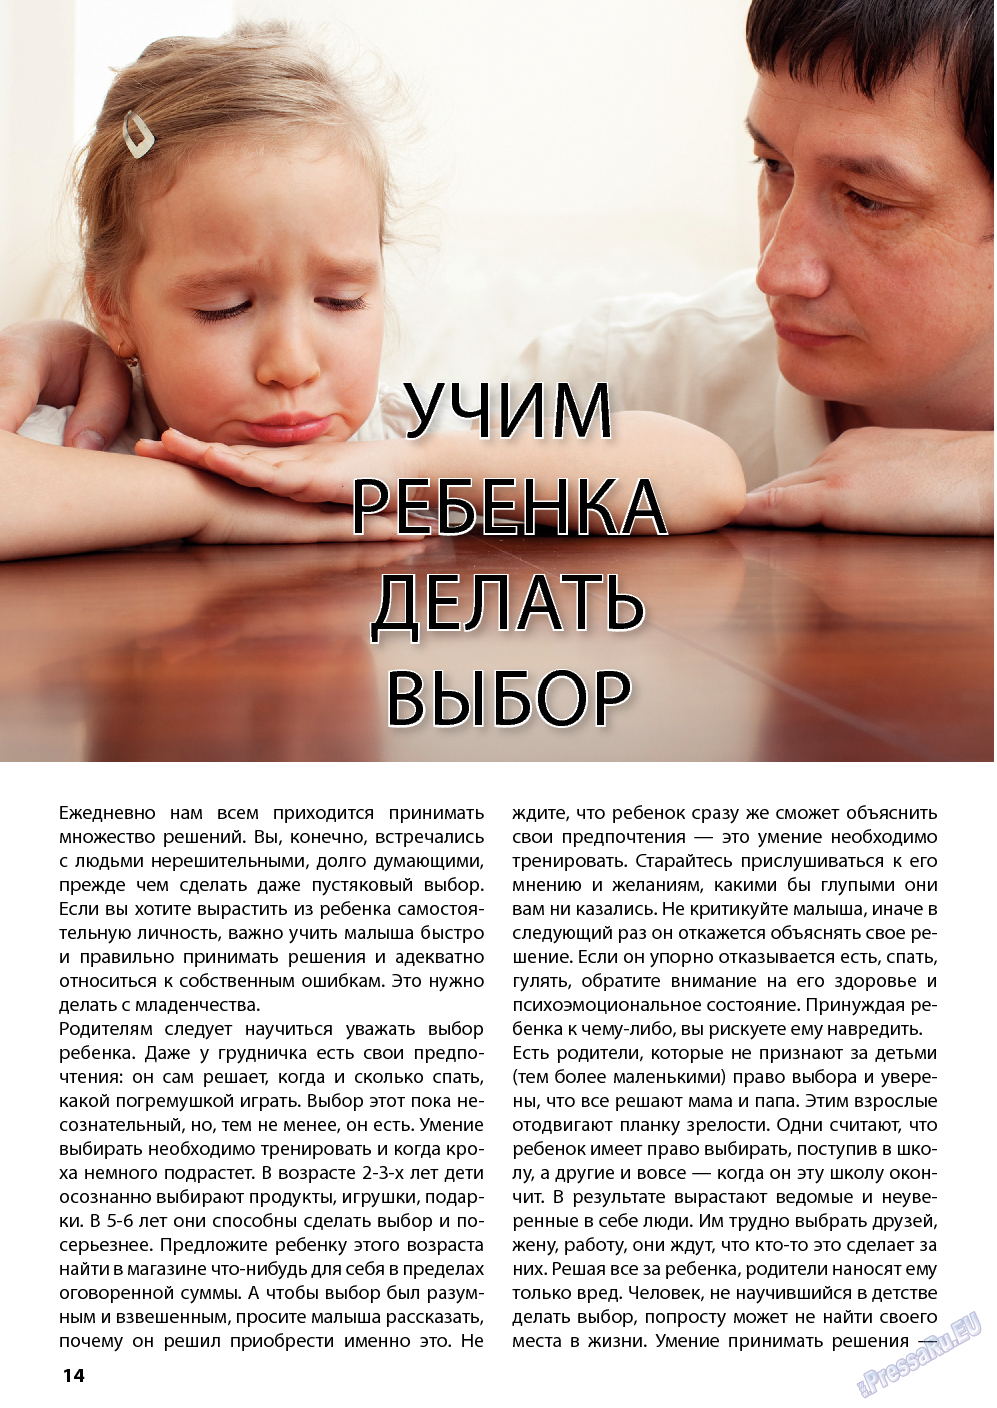 Wadim, журнал. 2013 №10 стр.14